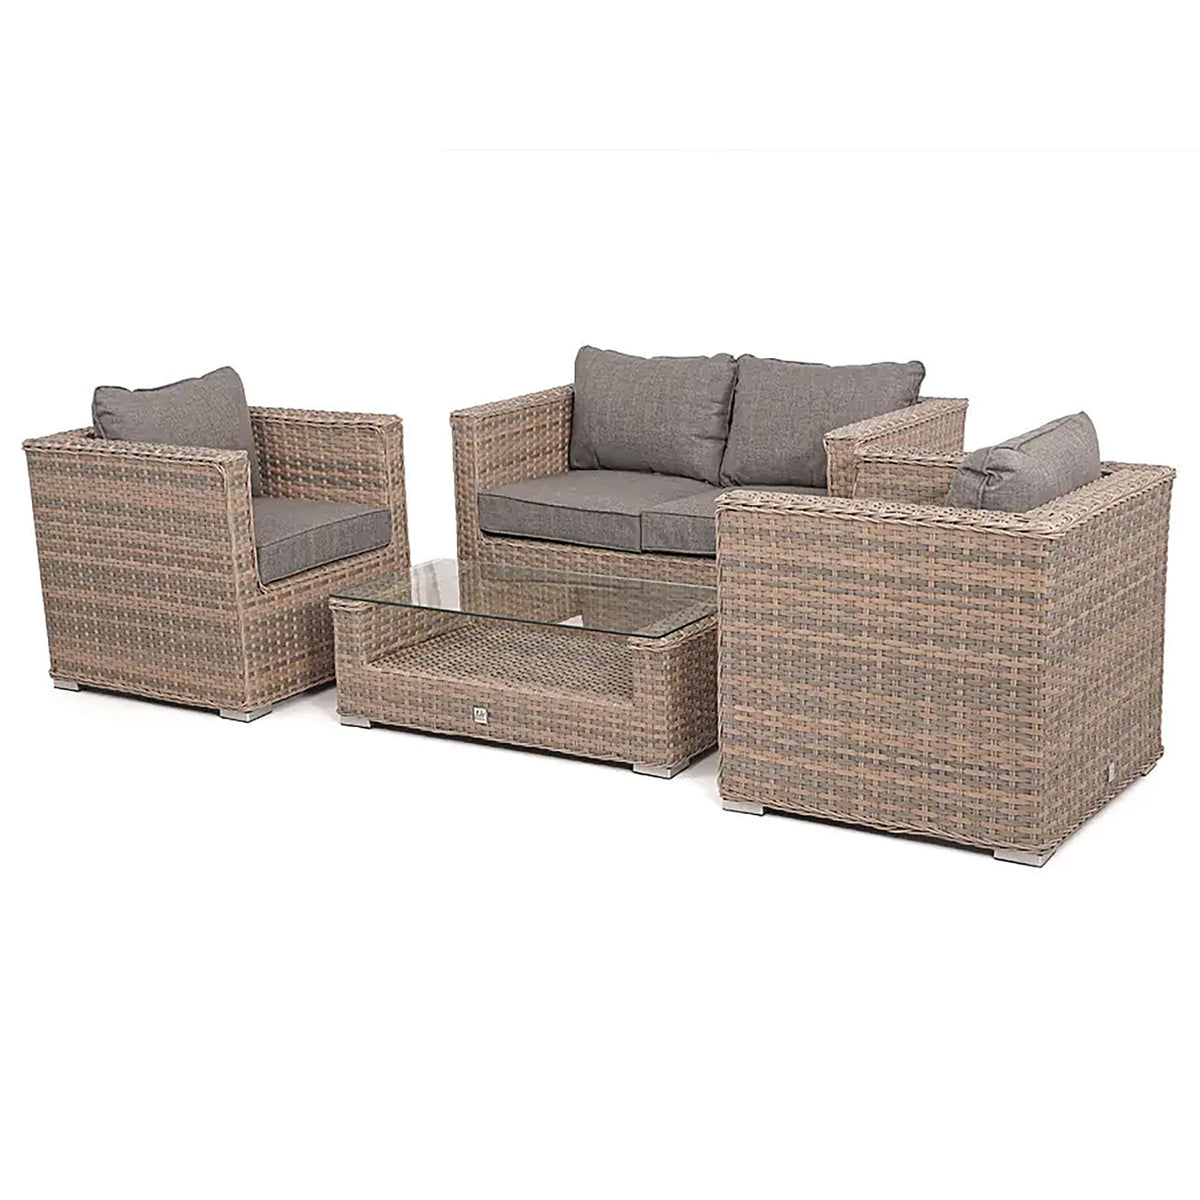 Bracken Outdoors Madrid Brown 2 Seat Lounge Sofa Garden Furniture Set with Coffee Table